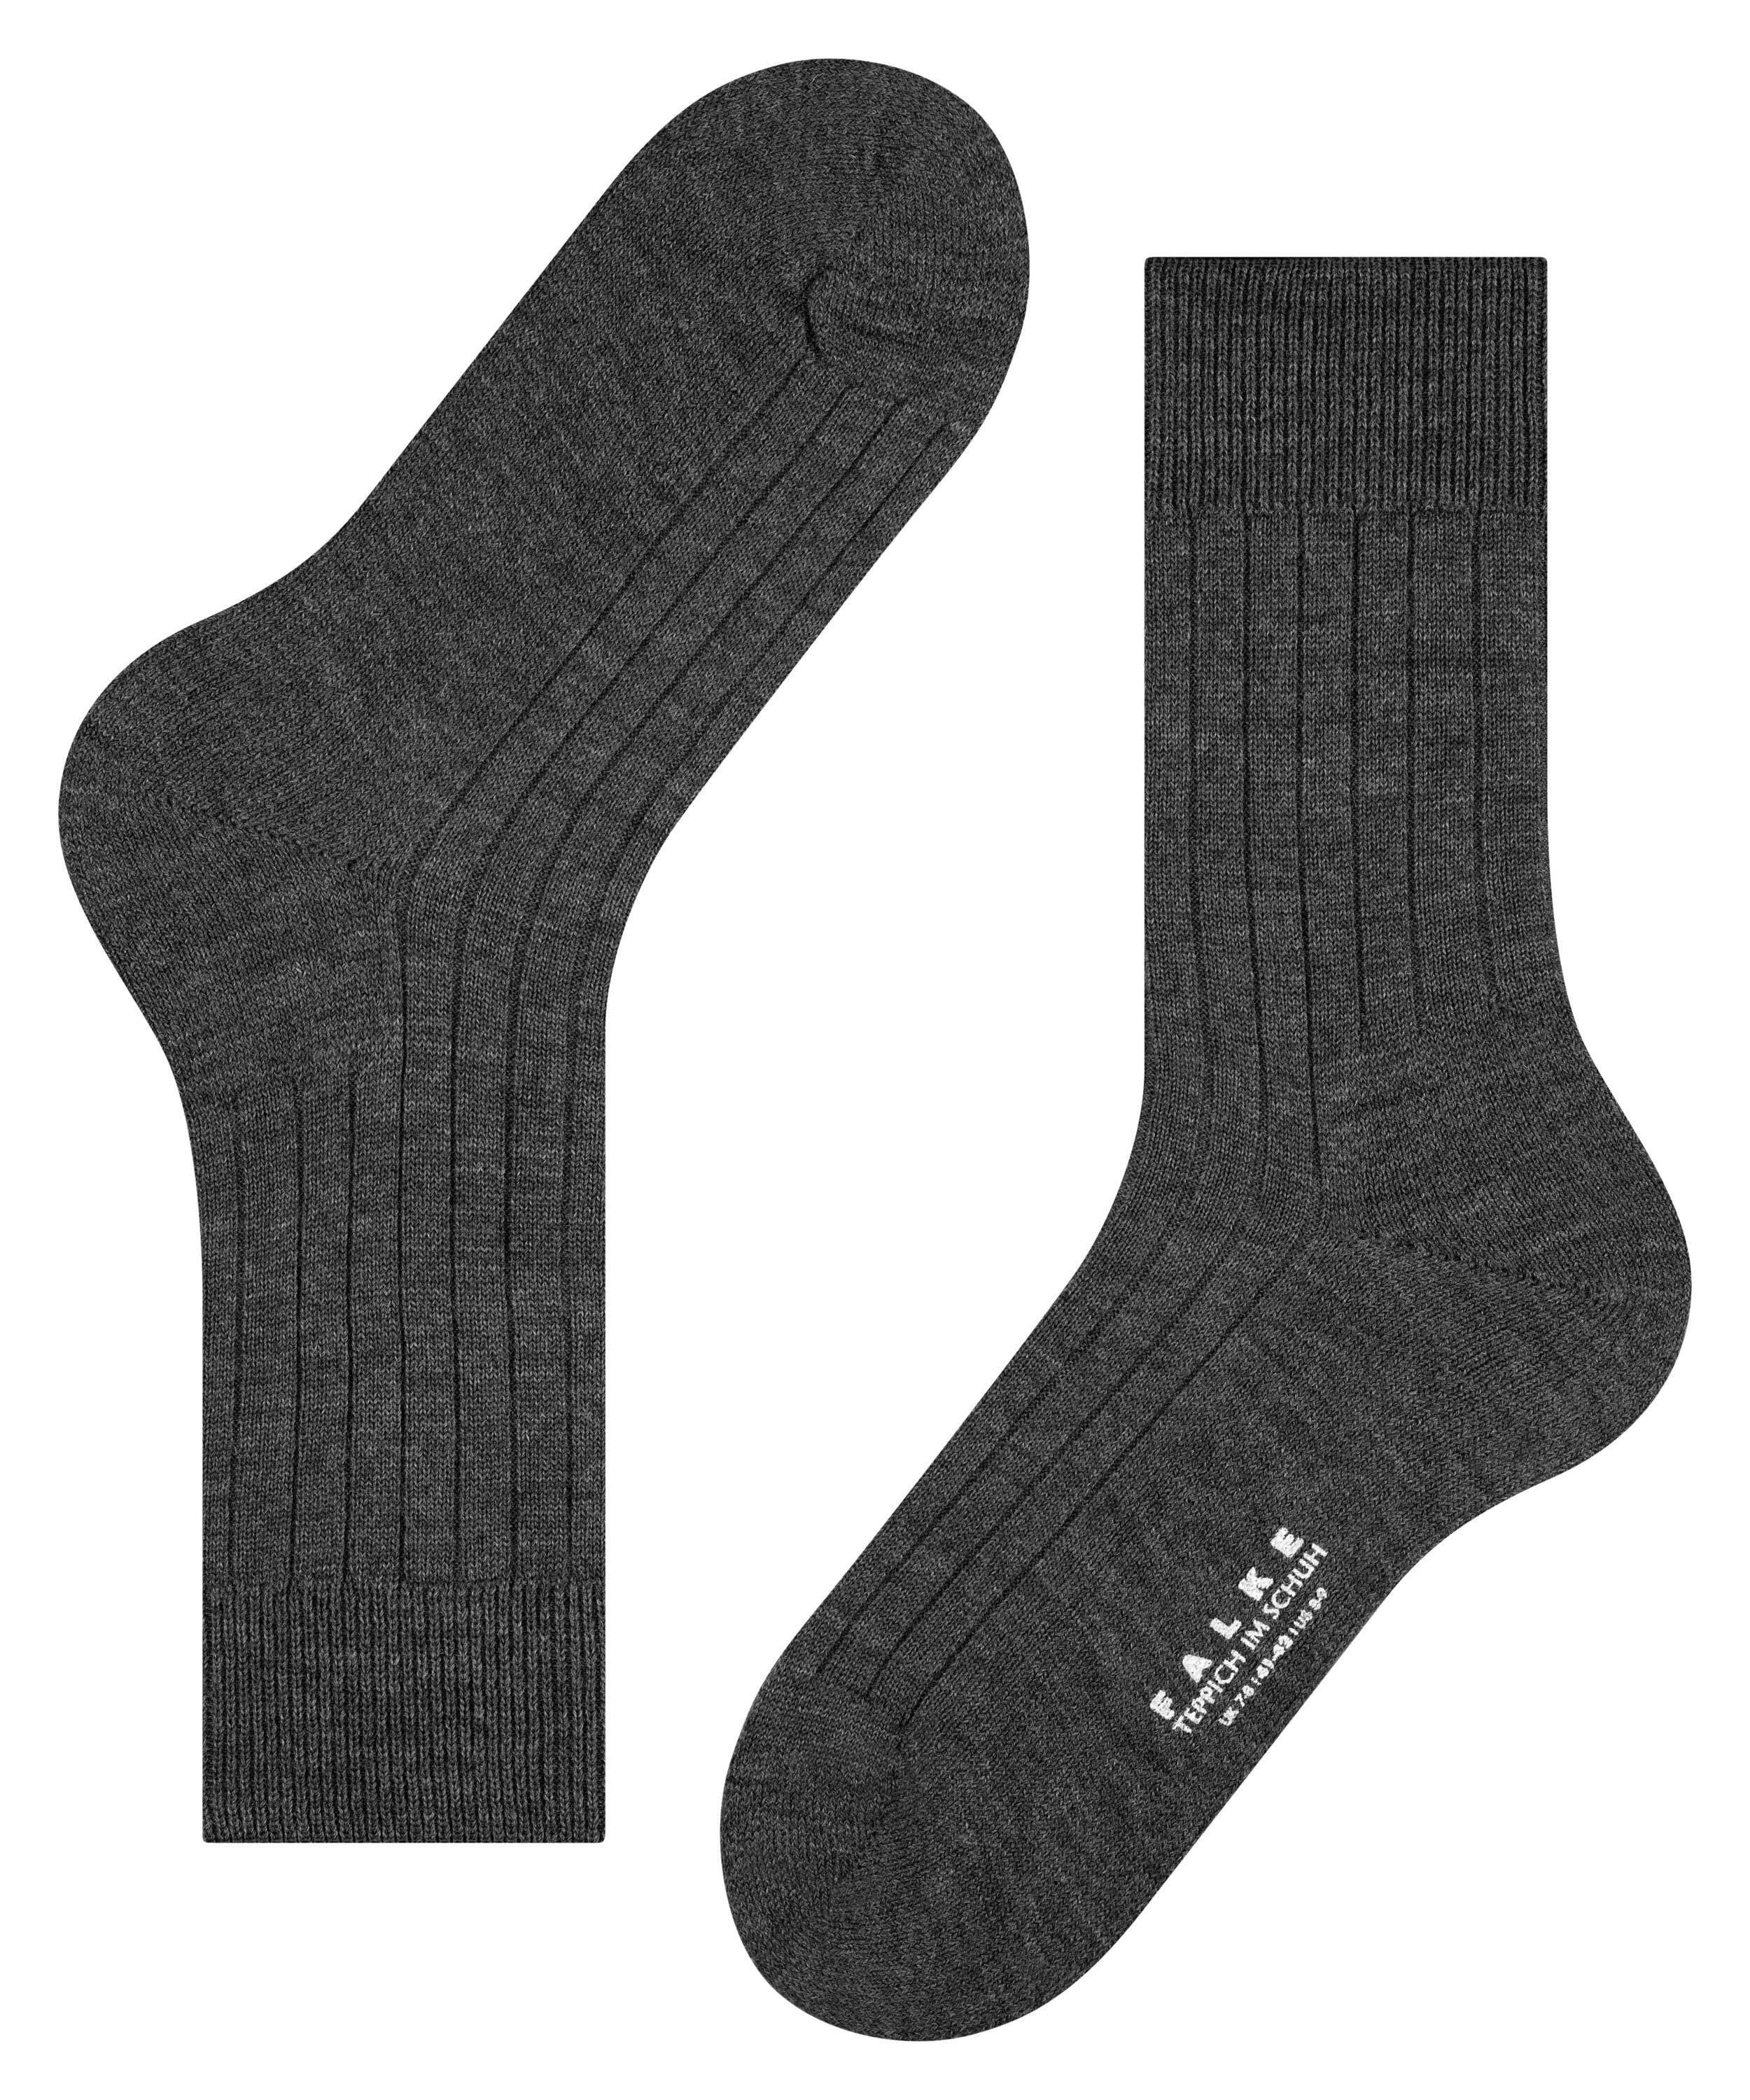 grey Schuh dark Teppich (1-Paar) Socken im (3070) FALKE